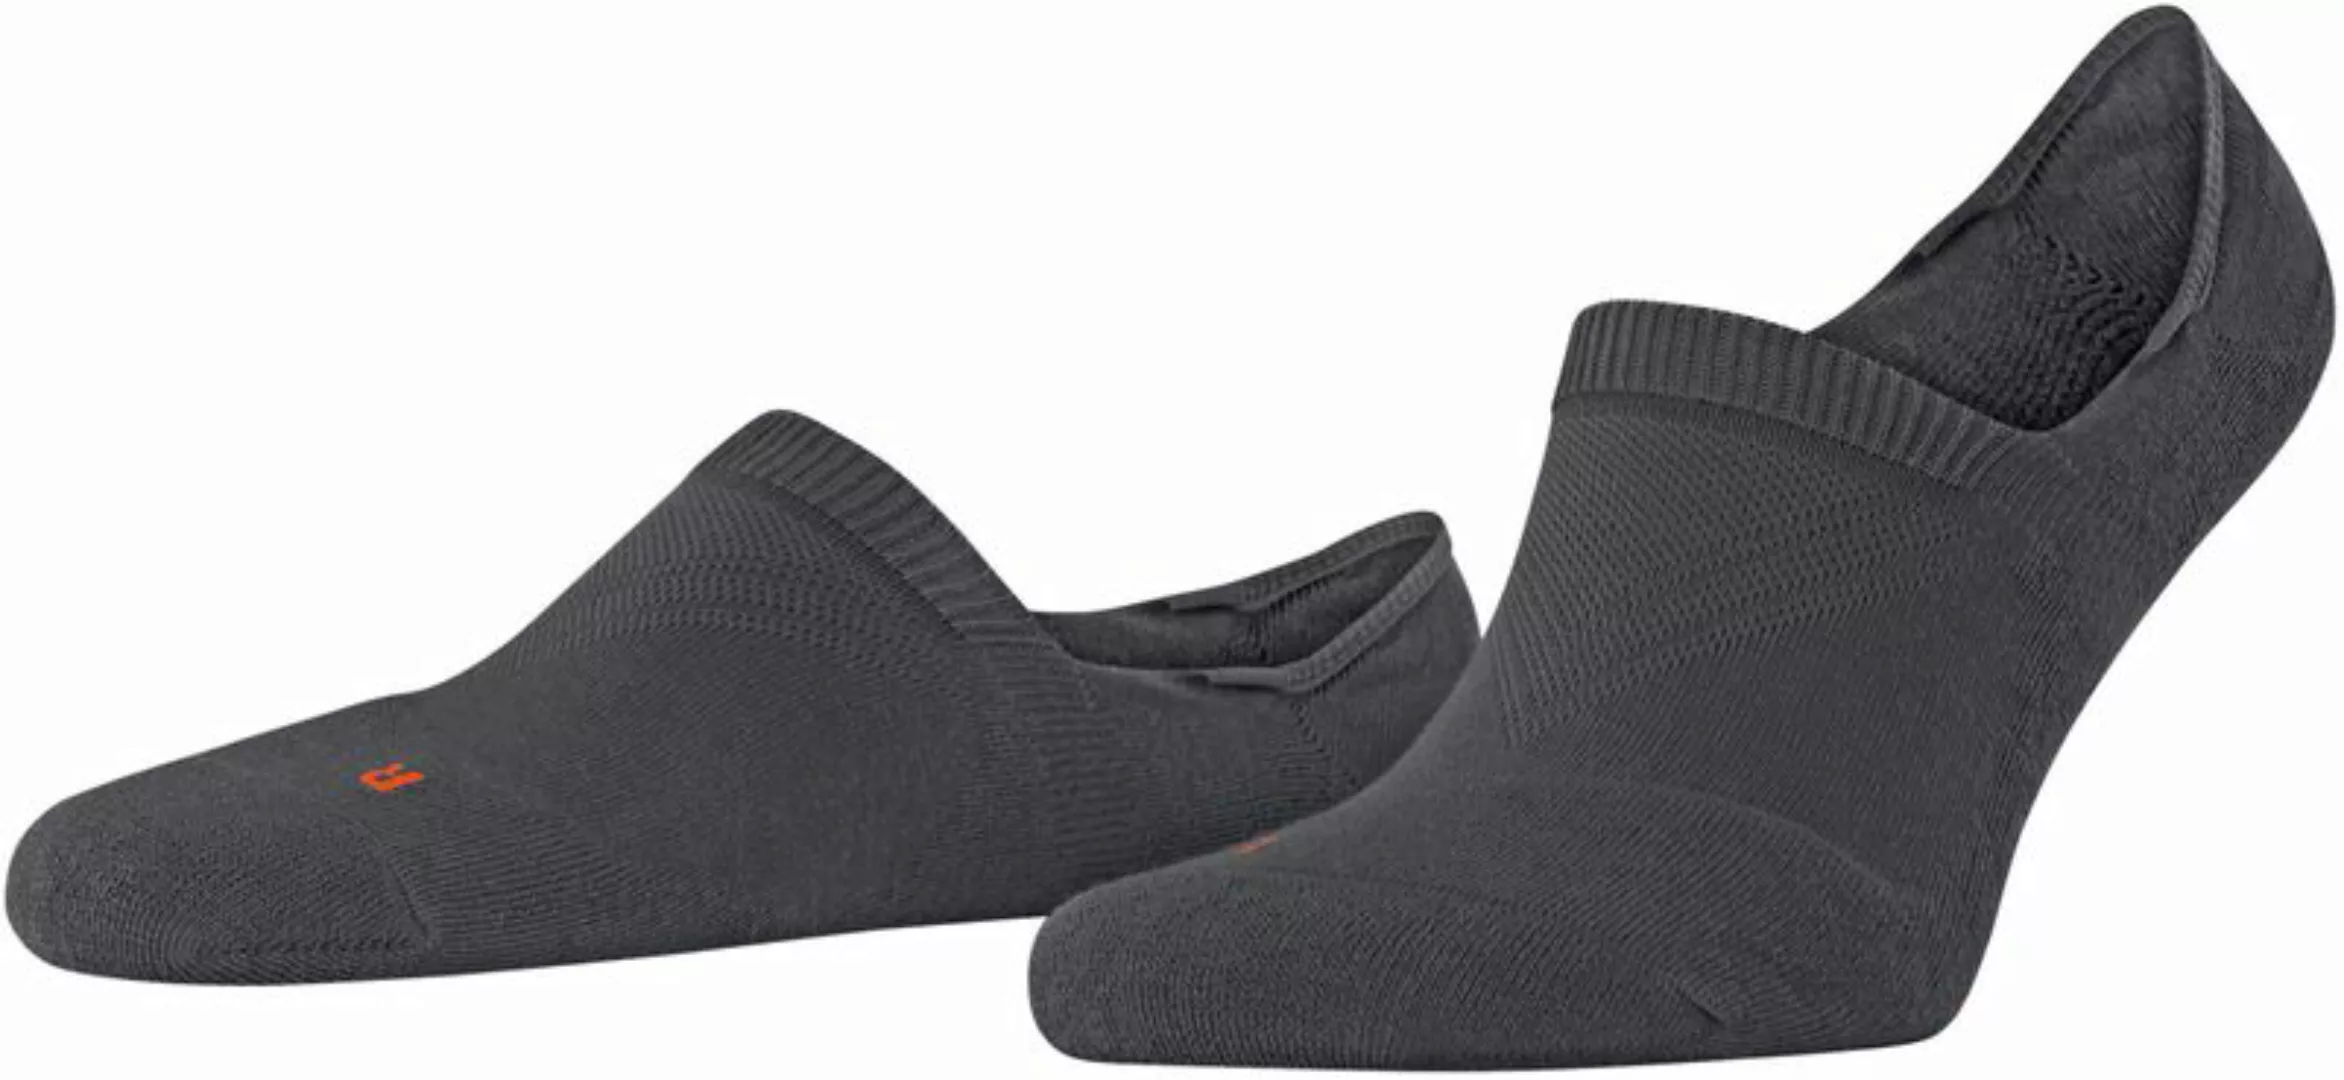 FALKE Cool Kick Socken Dunkelgrau - Größe 39-41 günstig online kaufen